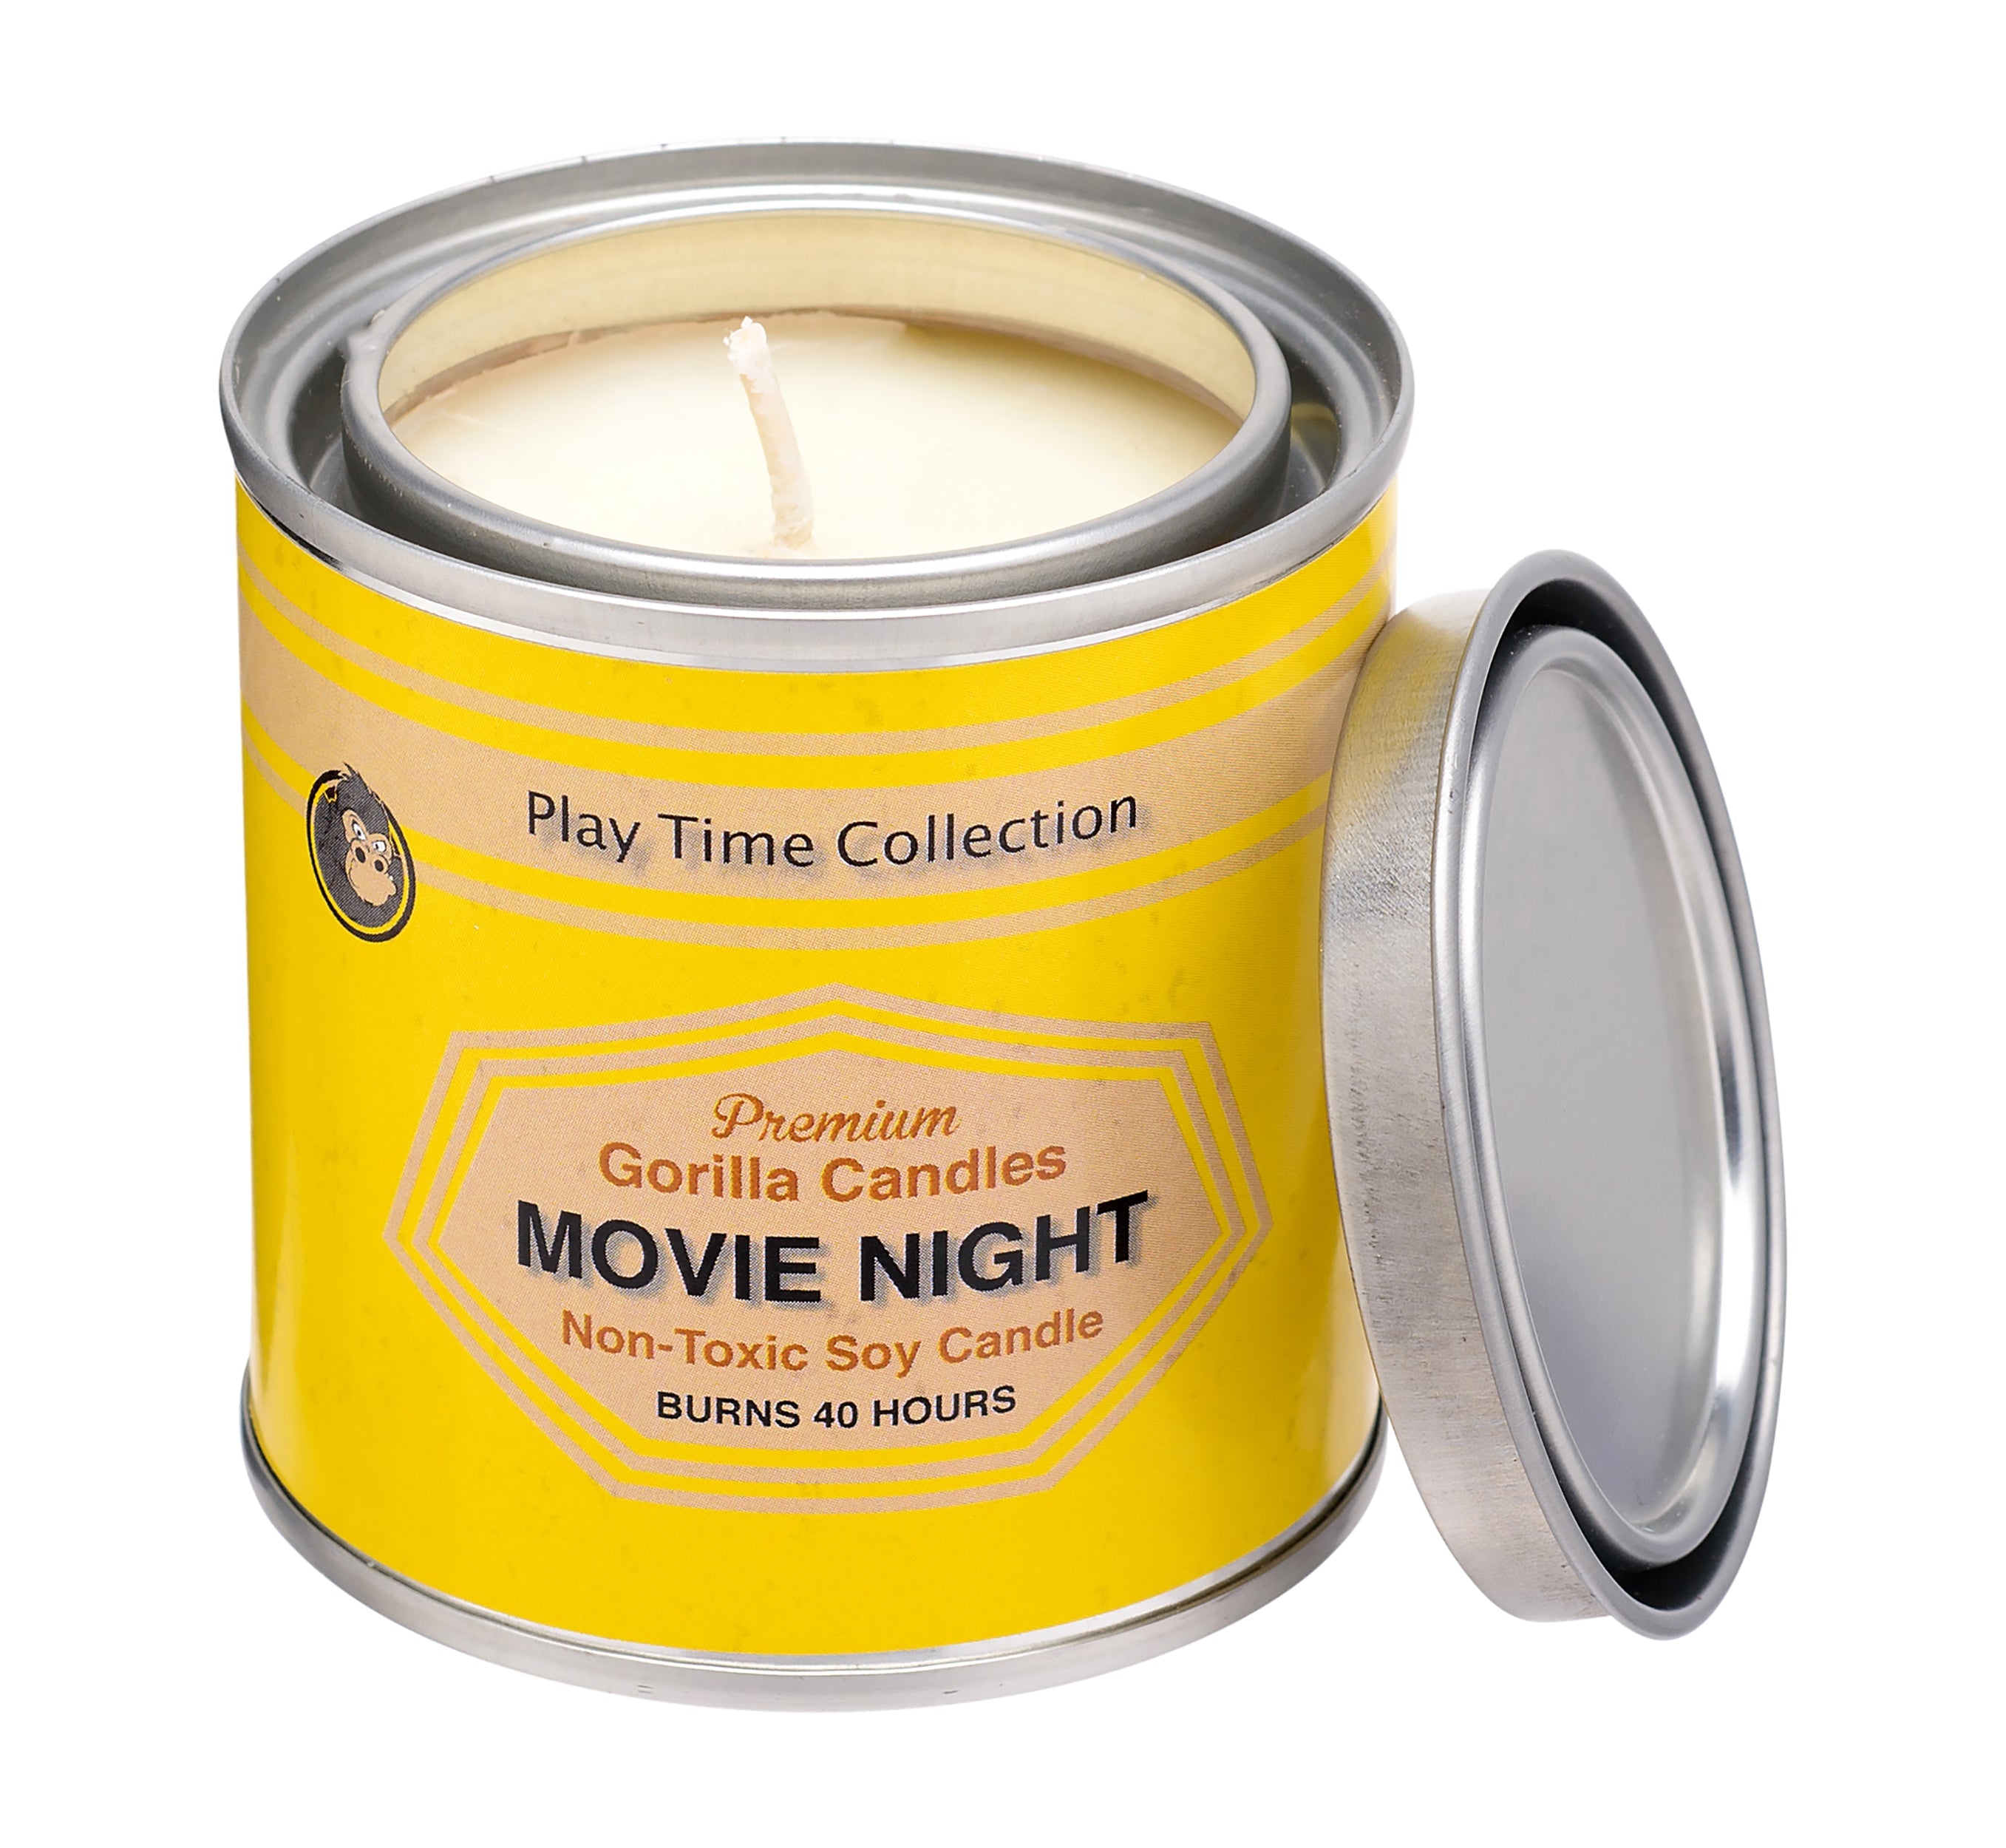 Movie Night by Gorilla Candles™